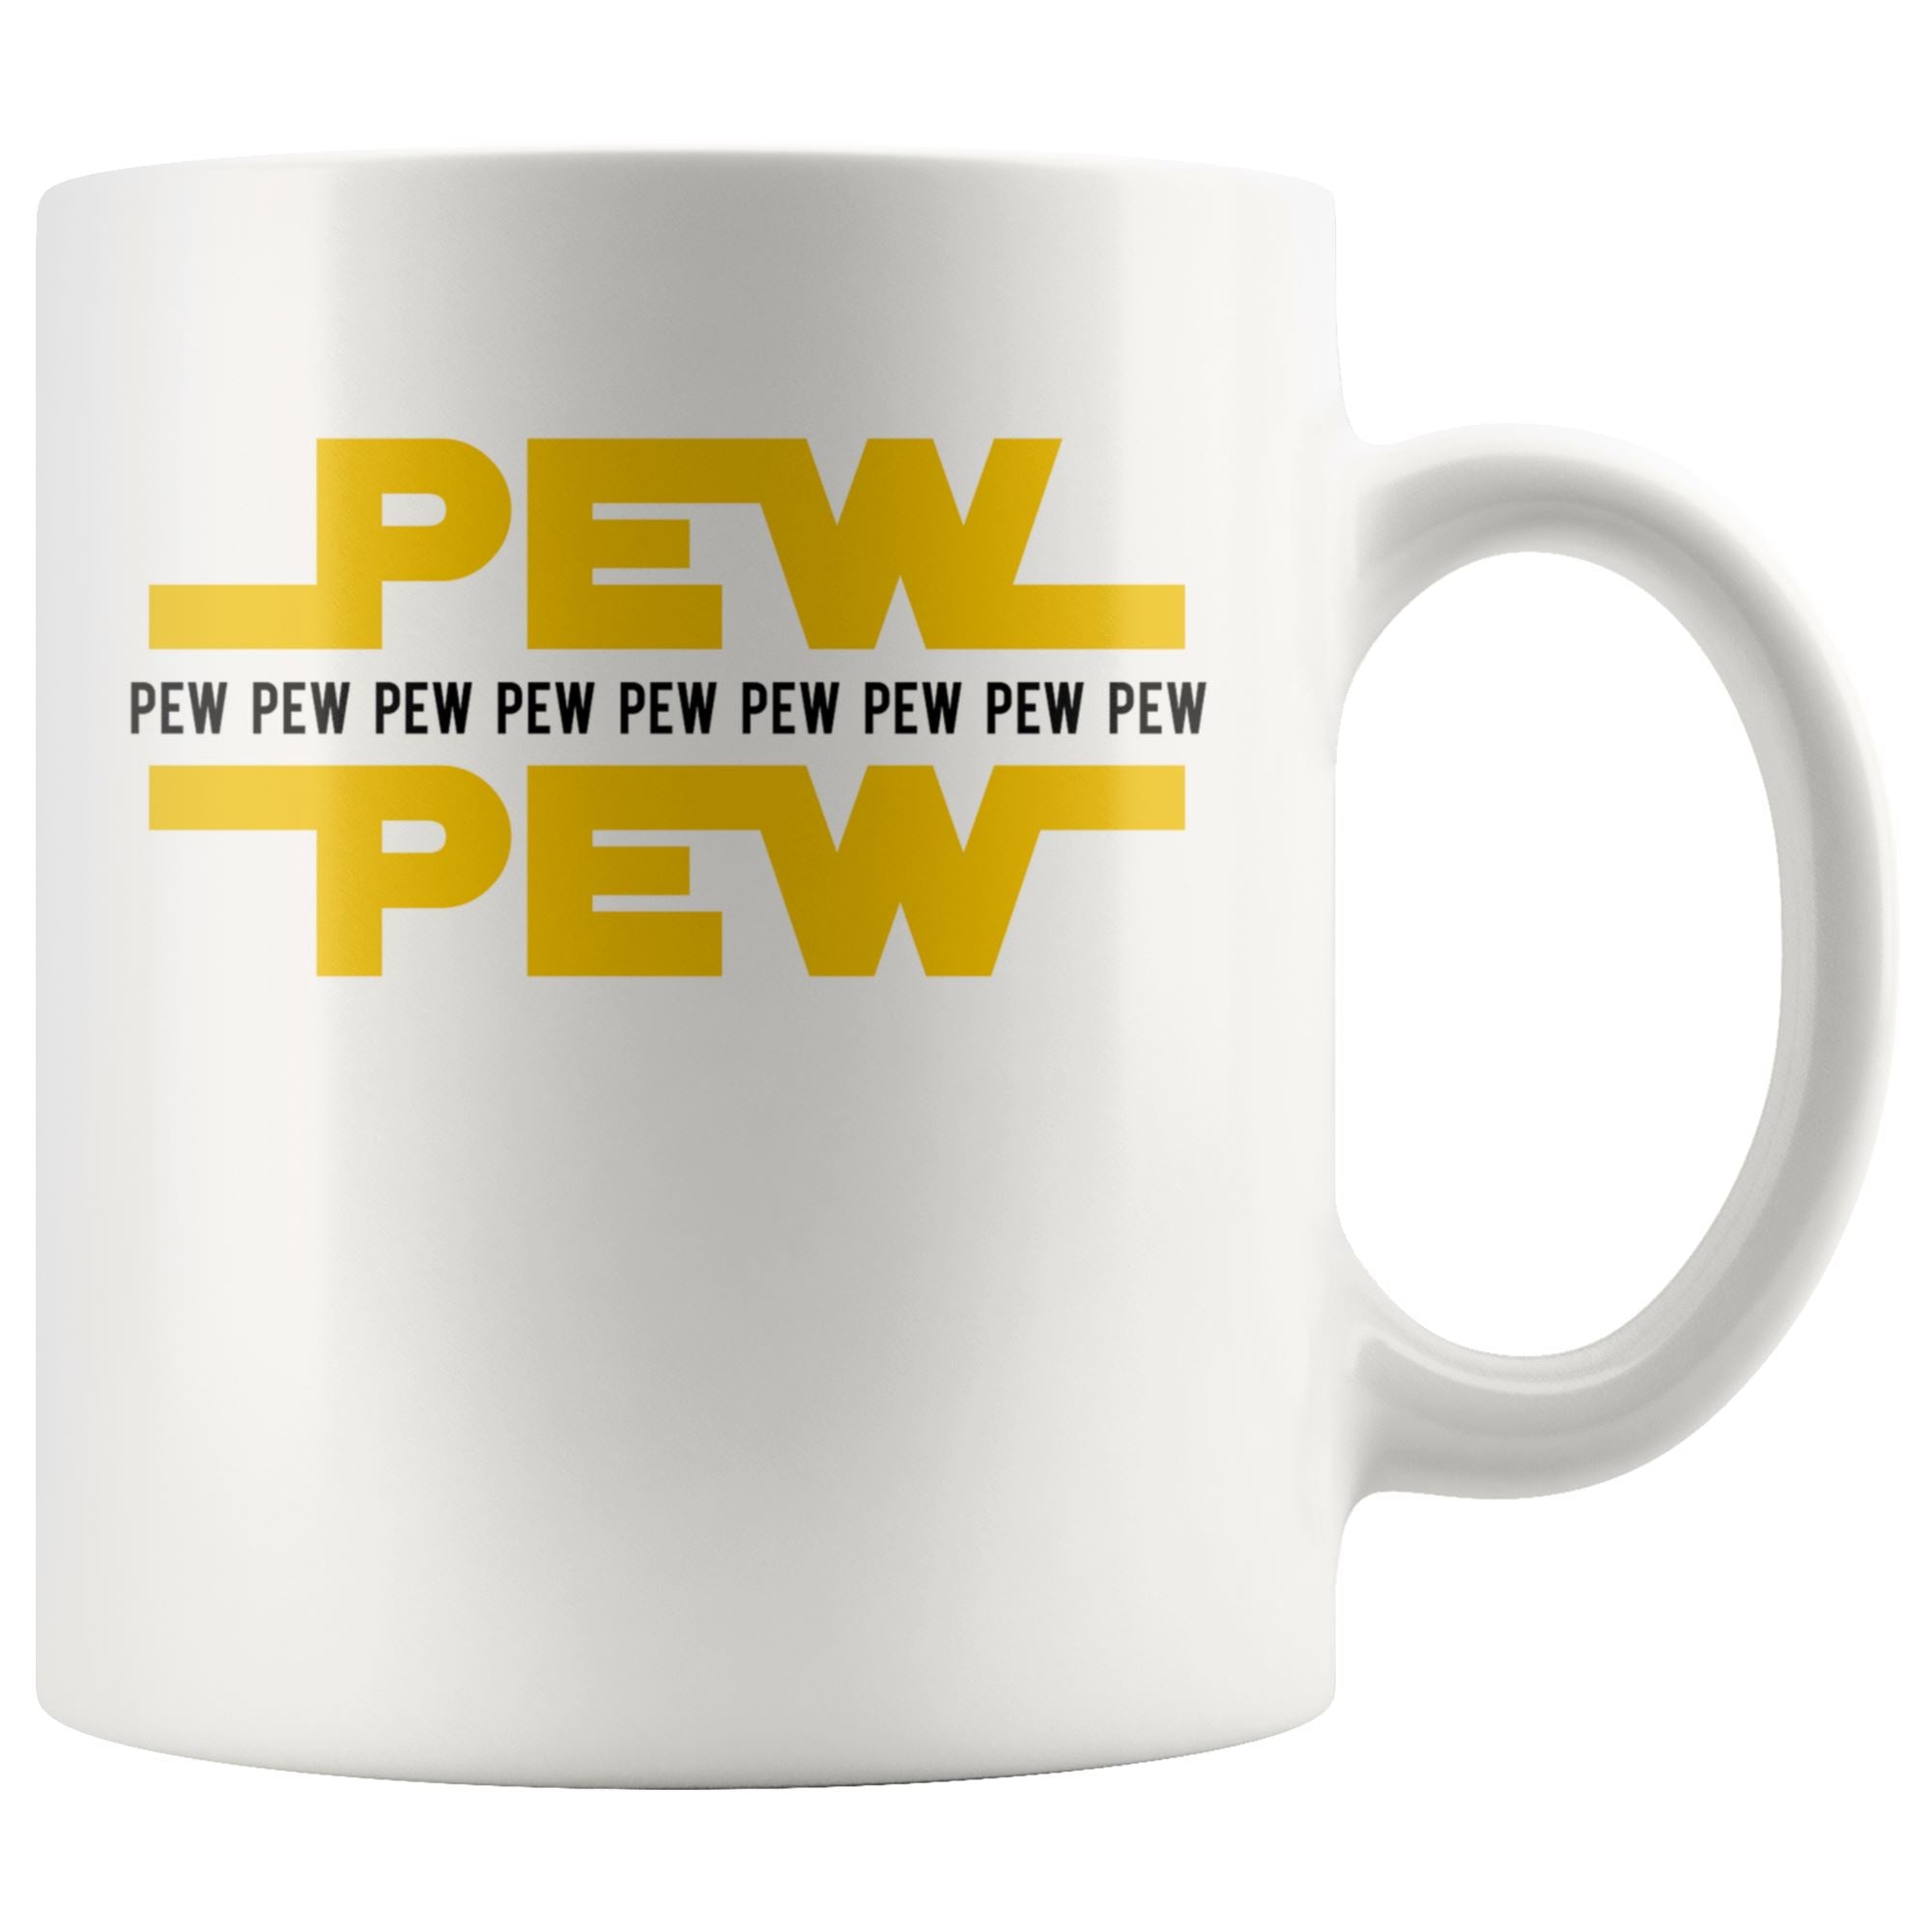 Pew Pew Mug Drinkware teelaunch 11oz Mug 